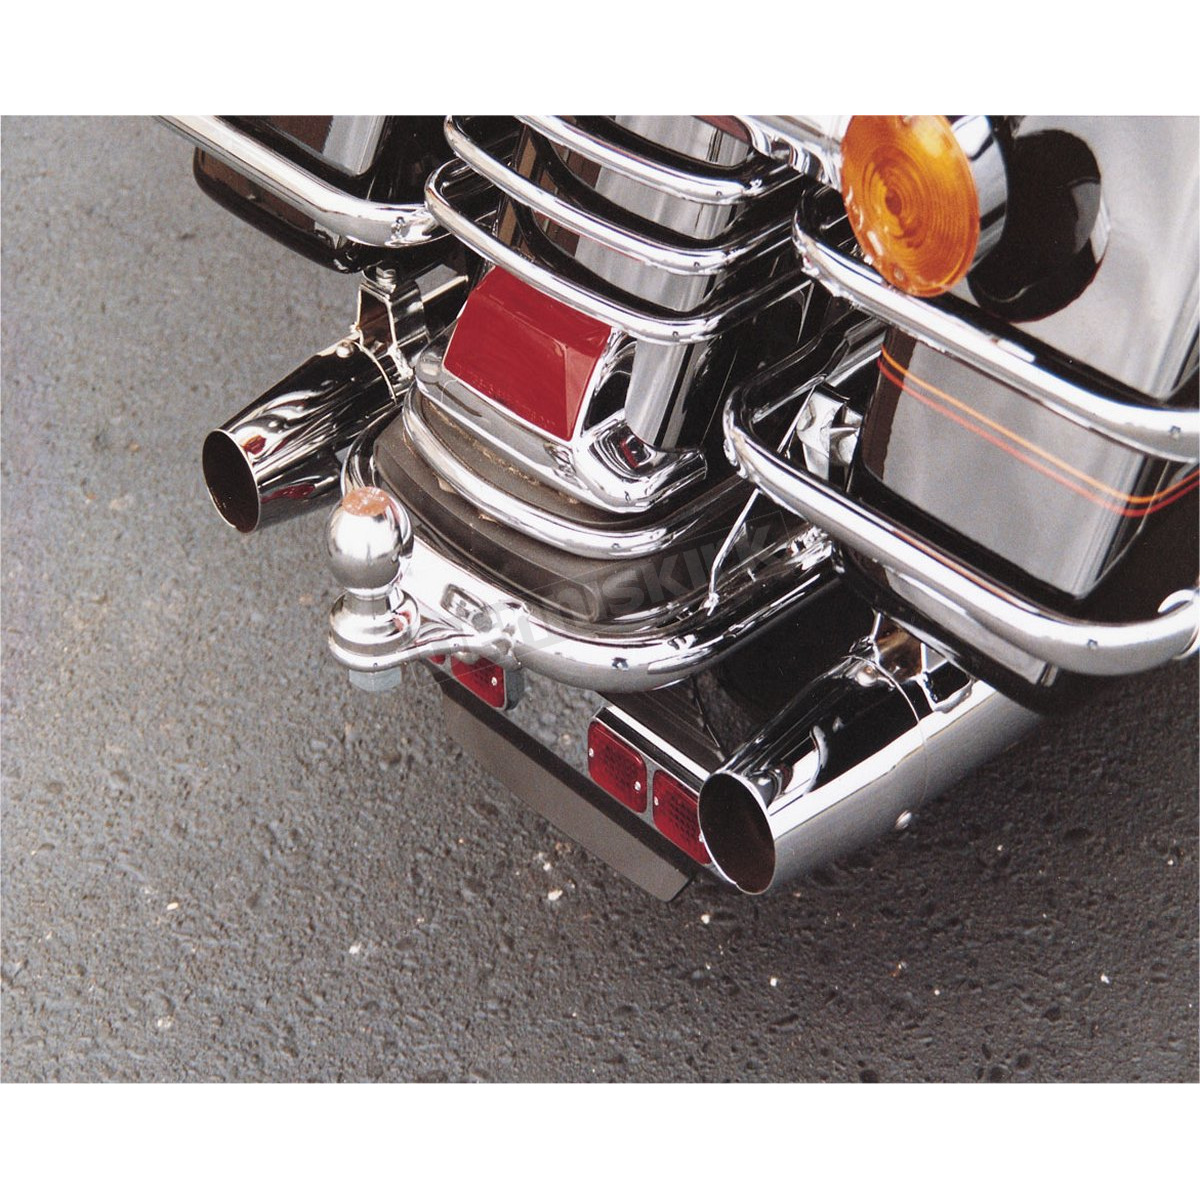 Khrome Werks Chrome Trailer Hitch - 720555C Harley-Davidson Motorcycle Trailer Hitch For Motorcycle Harley